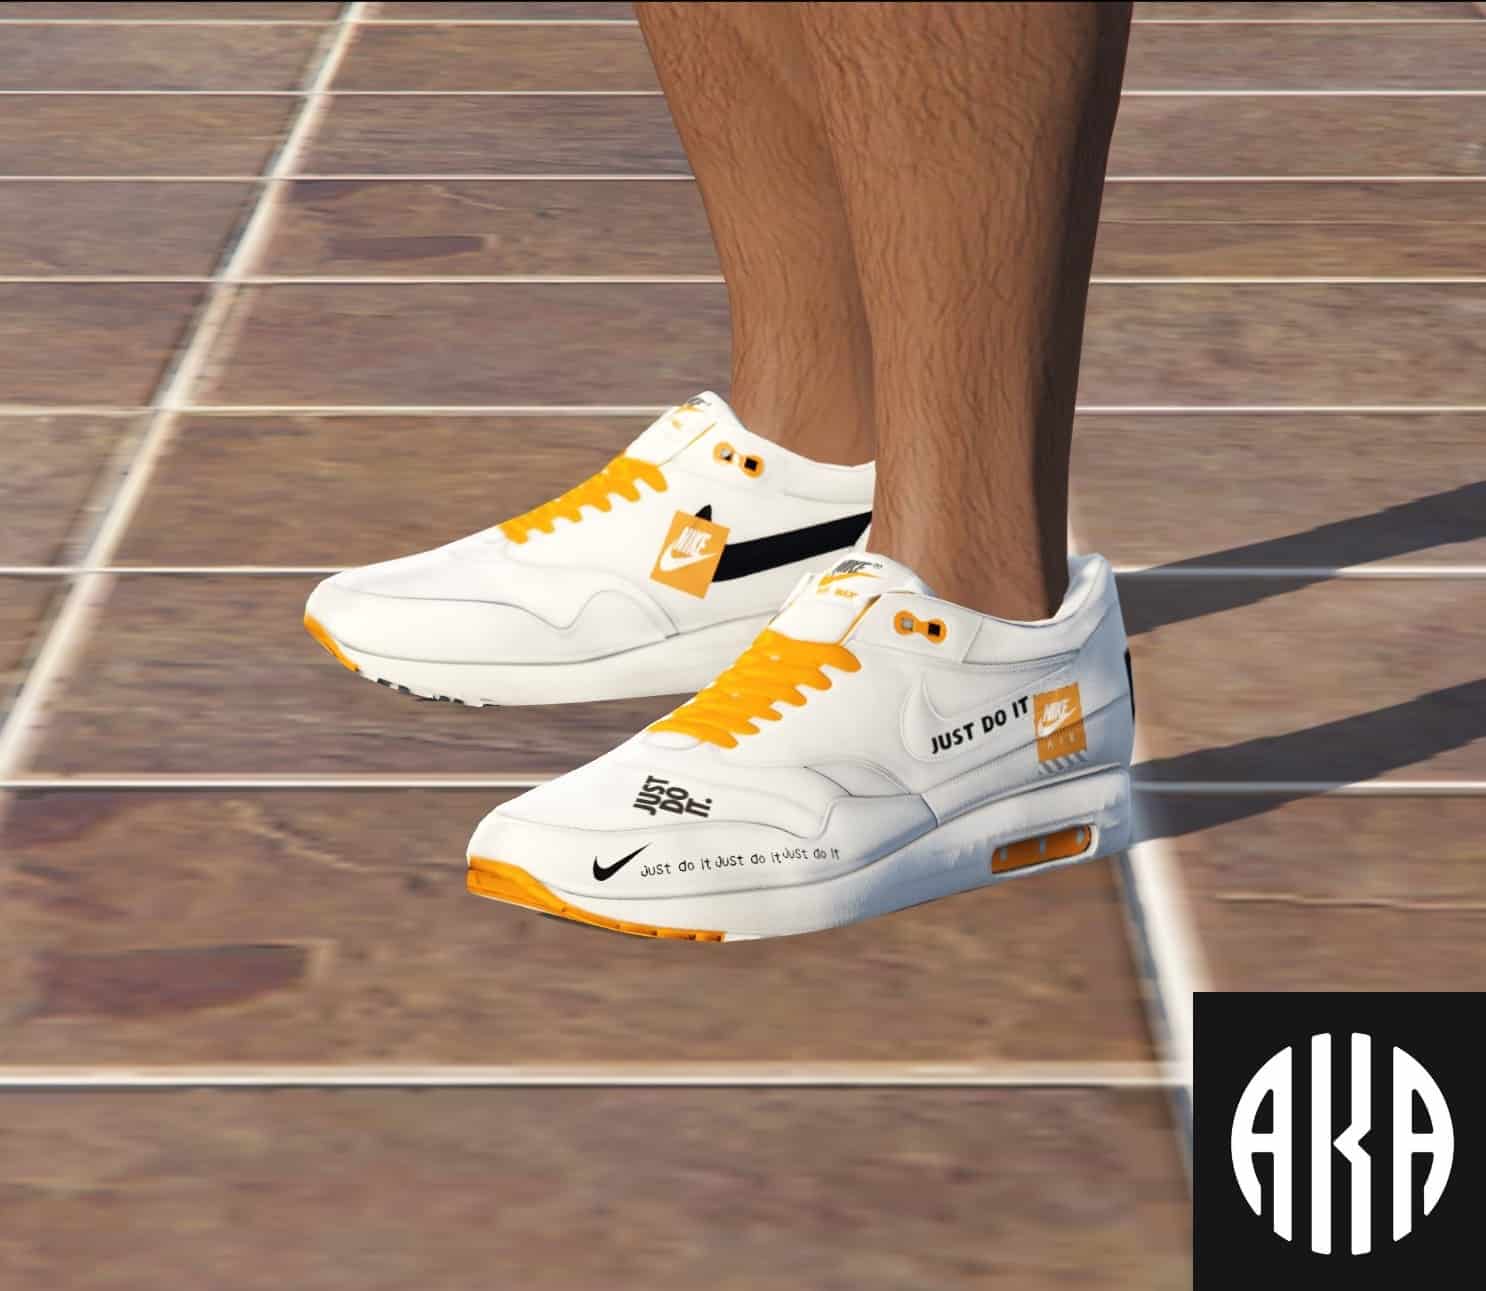 Nike Air Max 1 Just Do It 2.0 - GTA 5 Mod | Grand Theft Auto 5 Mod